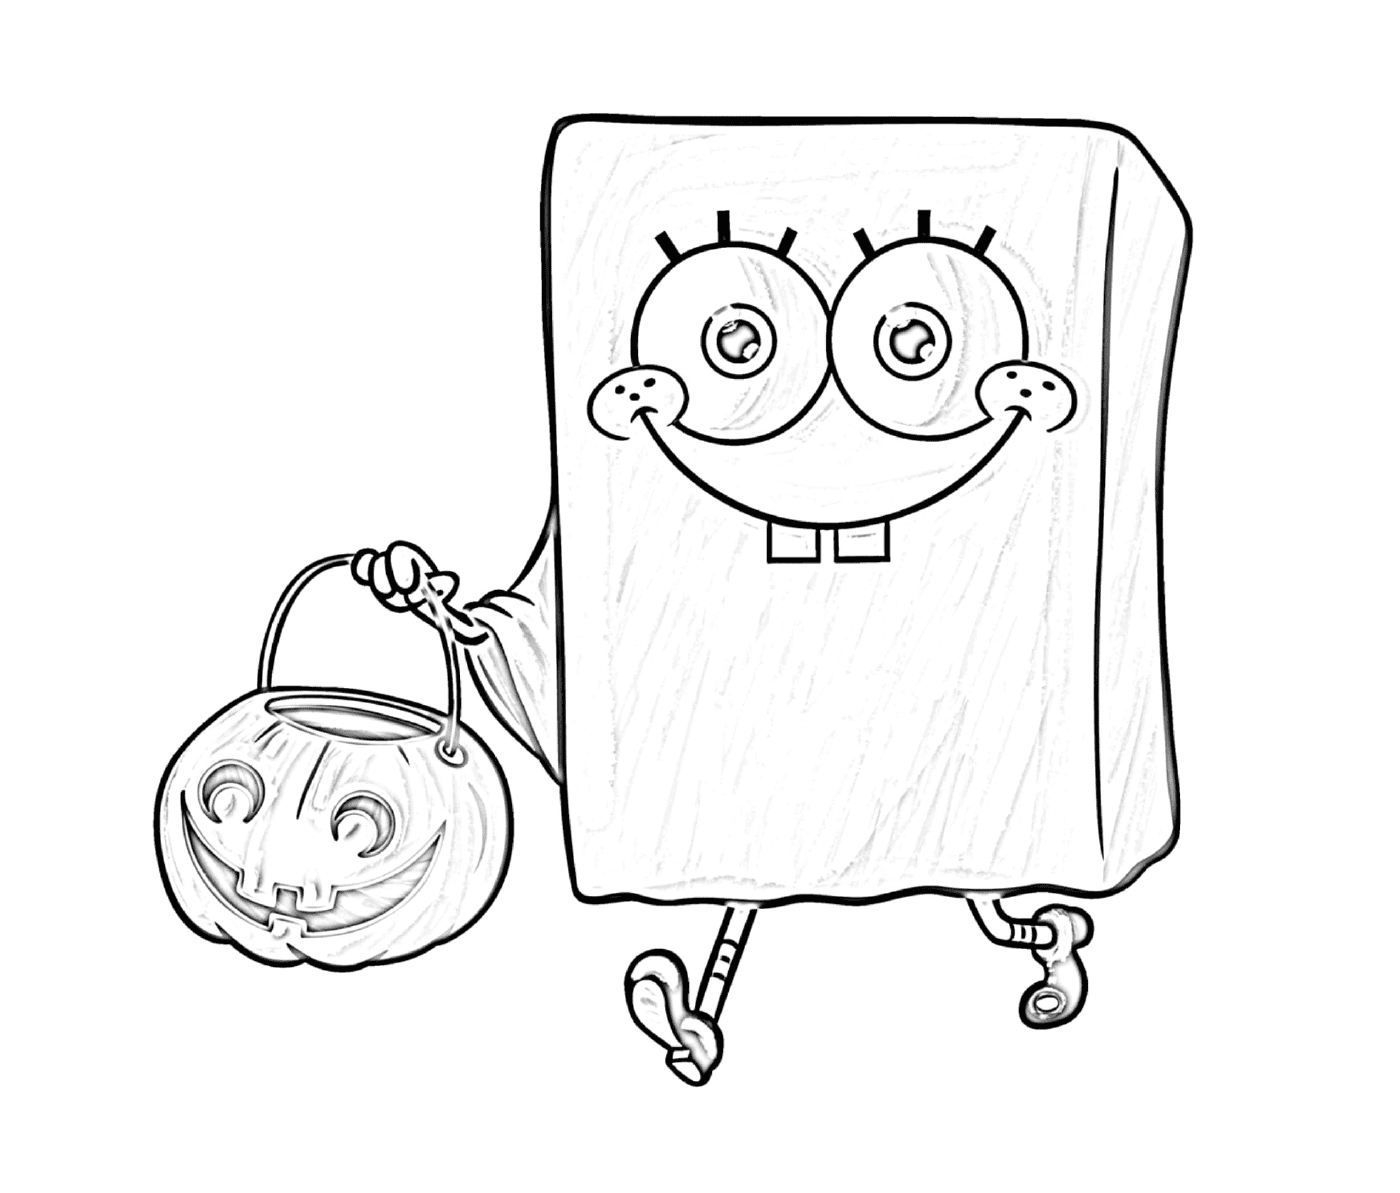  Bob the sponge for Halloween holding a bag 